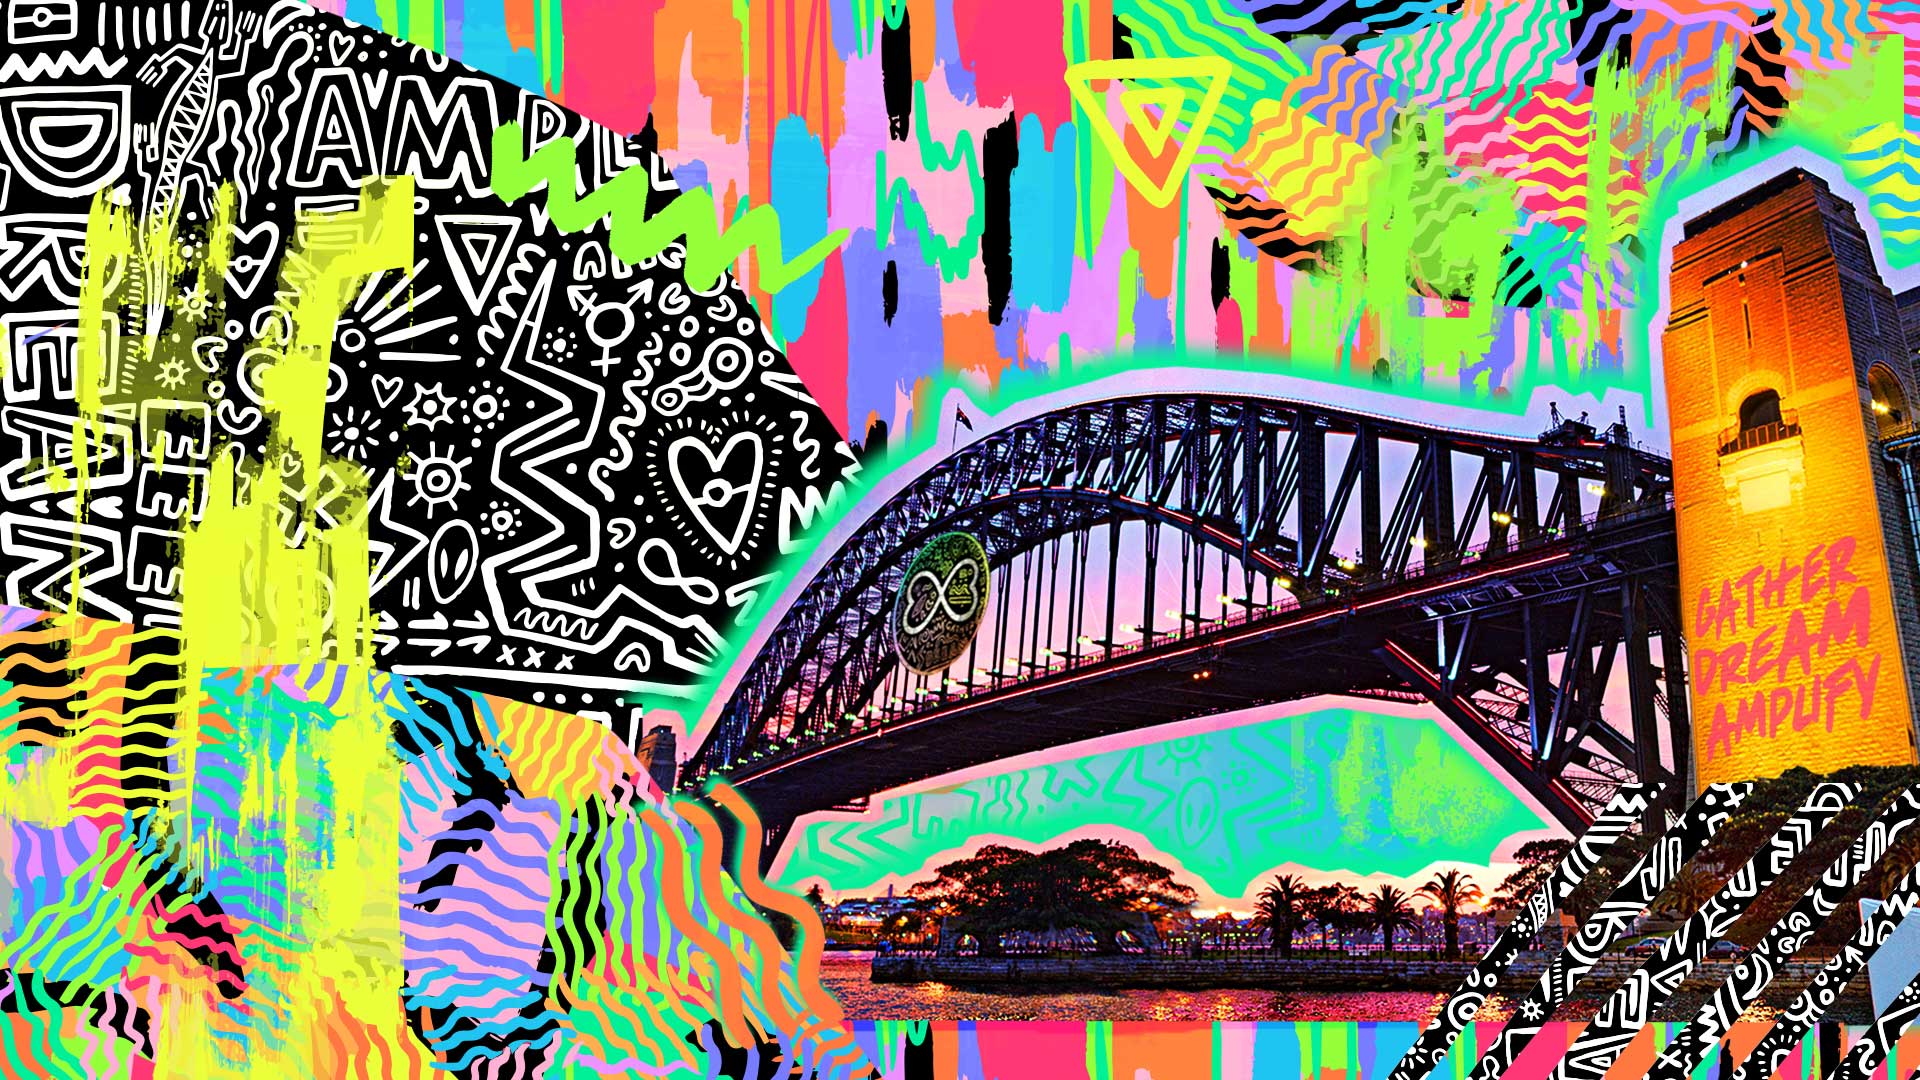 Sydney announces 2023 World Pride theme, artwork and key dates.